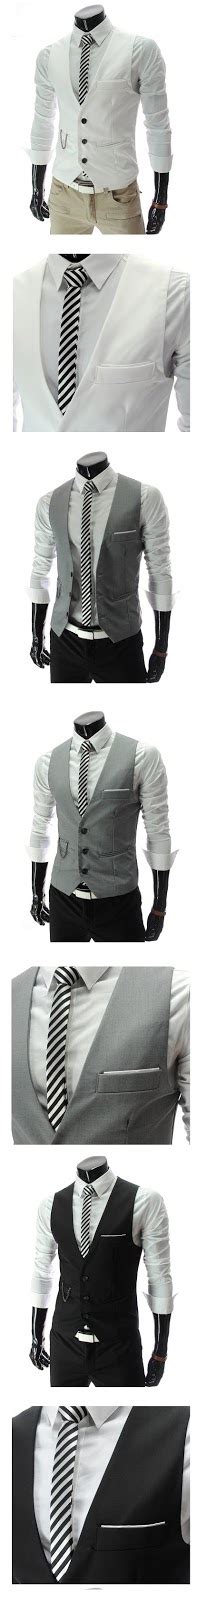 Baju vest lelaki untuk pejabat slim fit vest coat men's office dcp7754 - Dopcip